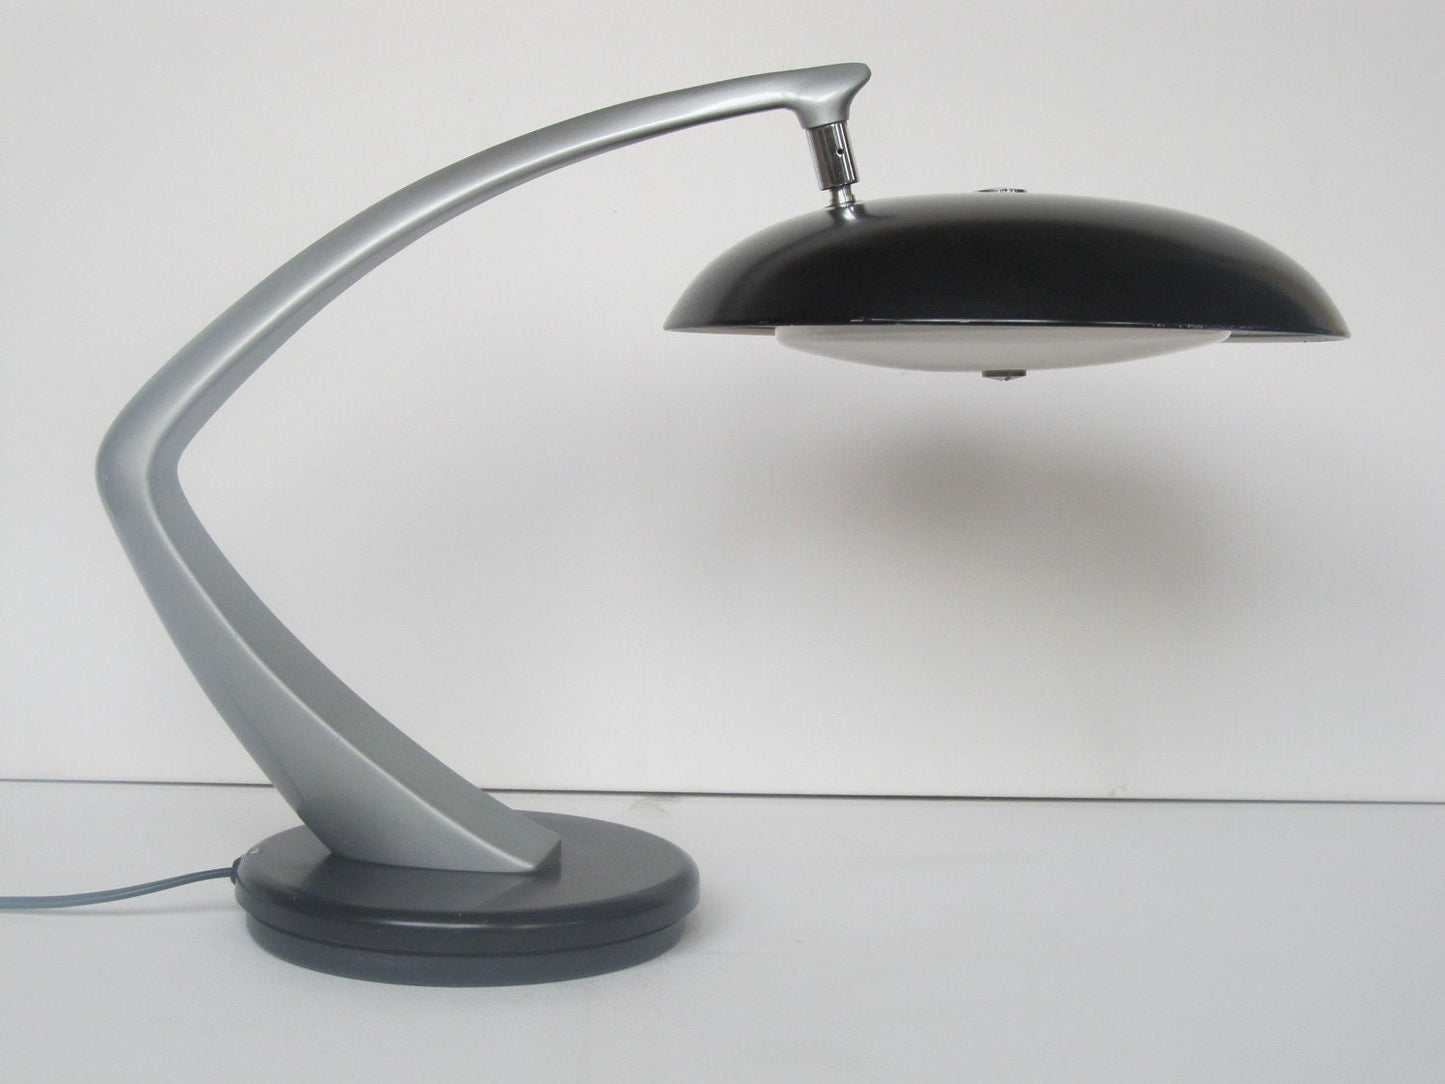 Fase Boomerang bureau tafellamp Madrid Spanje. Prachtige lamp uit de jaren 60 en begin jaren 70